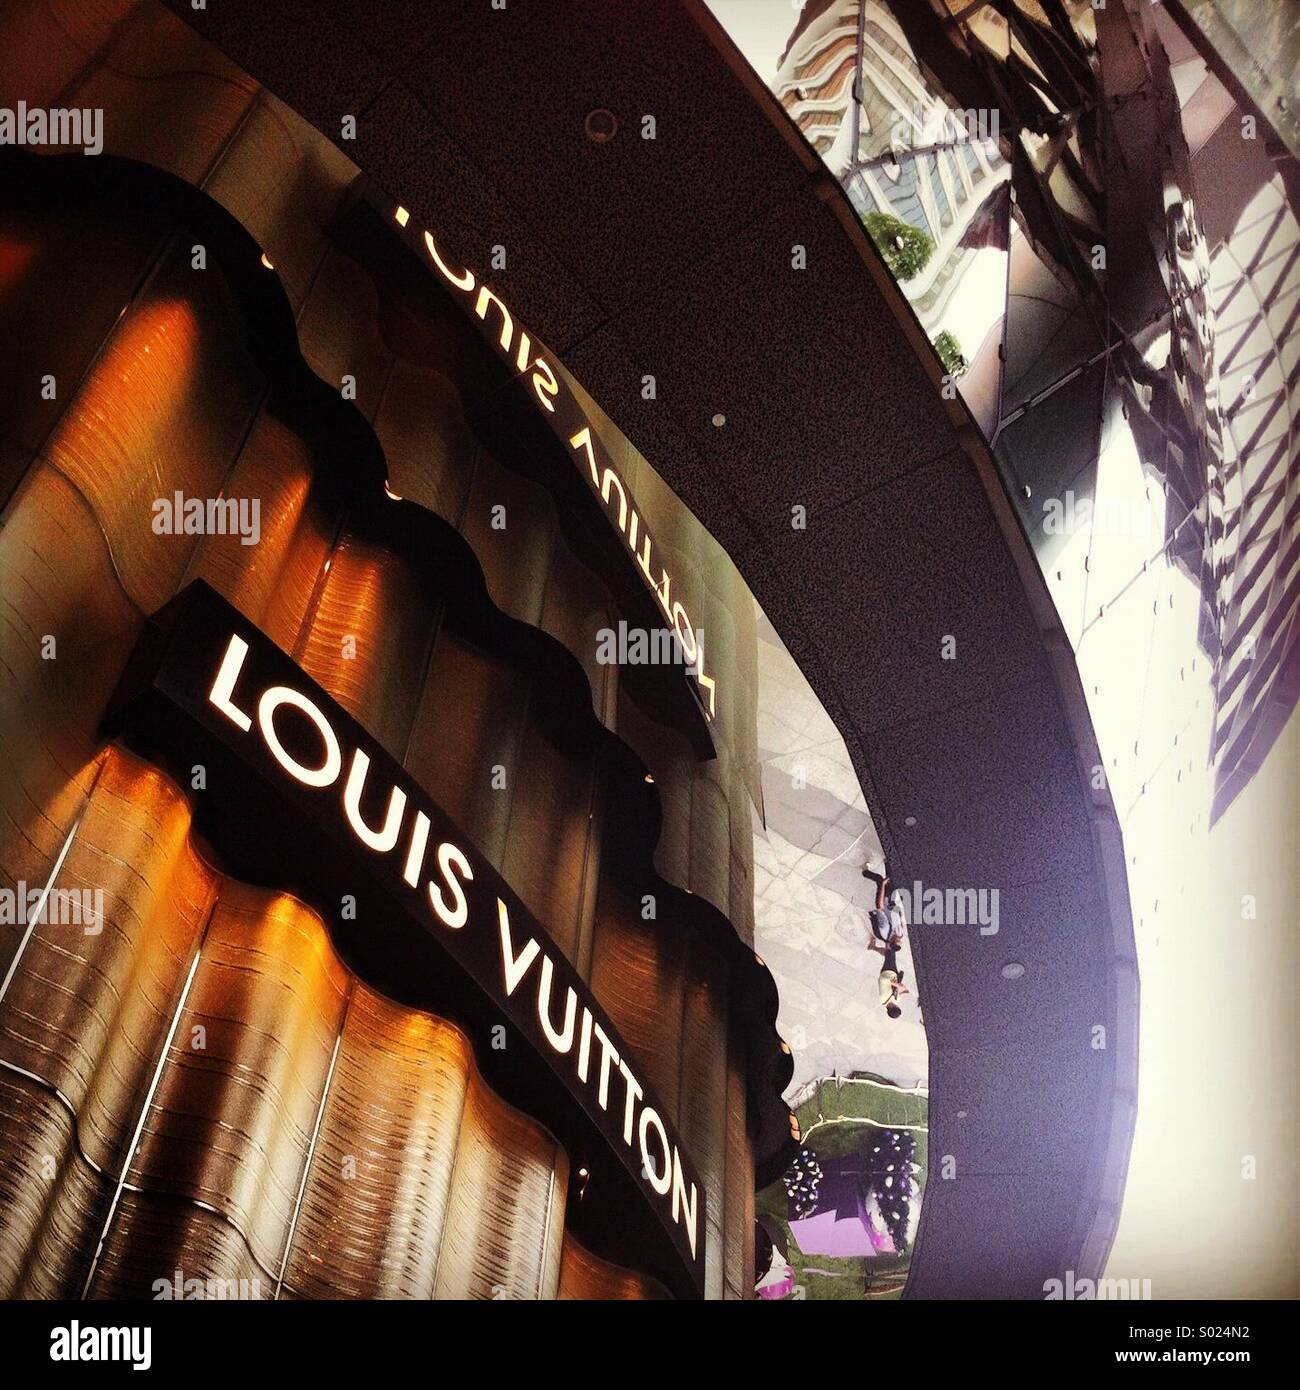 The Louis Vuitton Store, Changi Airport, Singapore, South East Asia Stock  Photo - Alamy